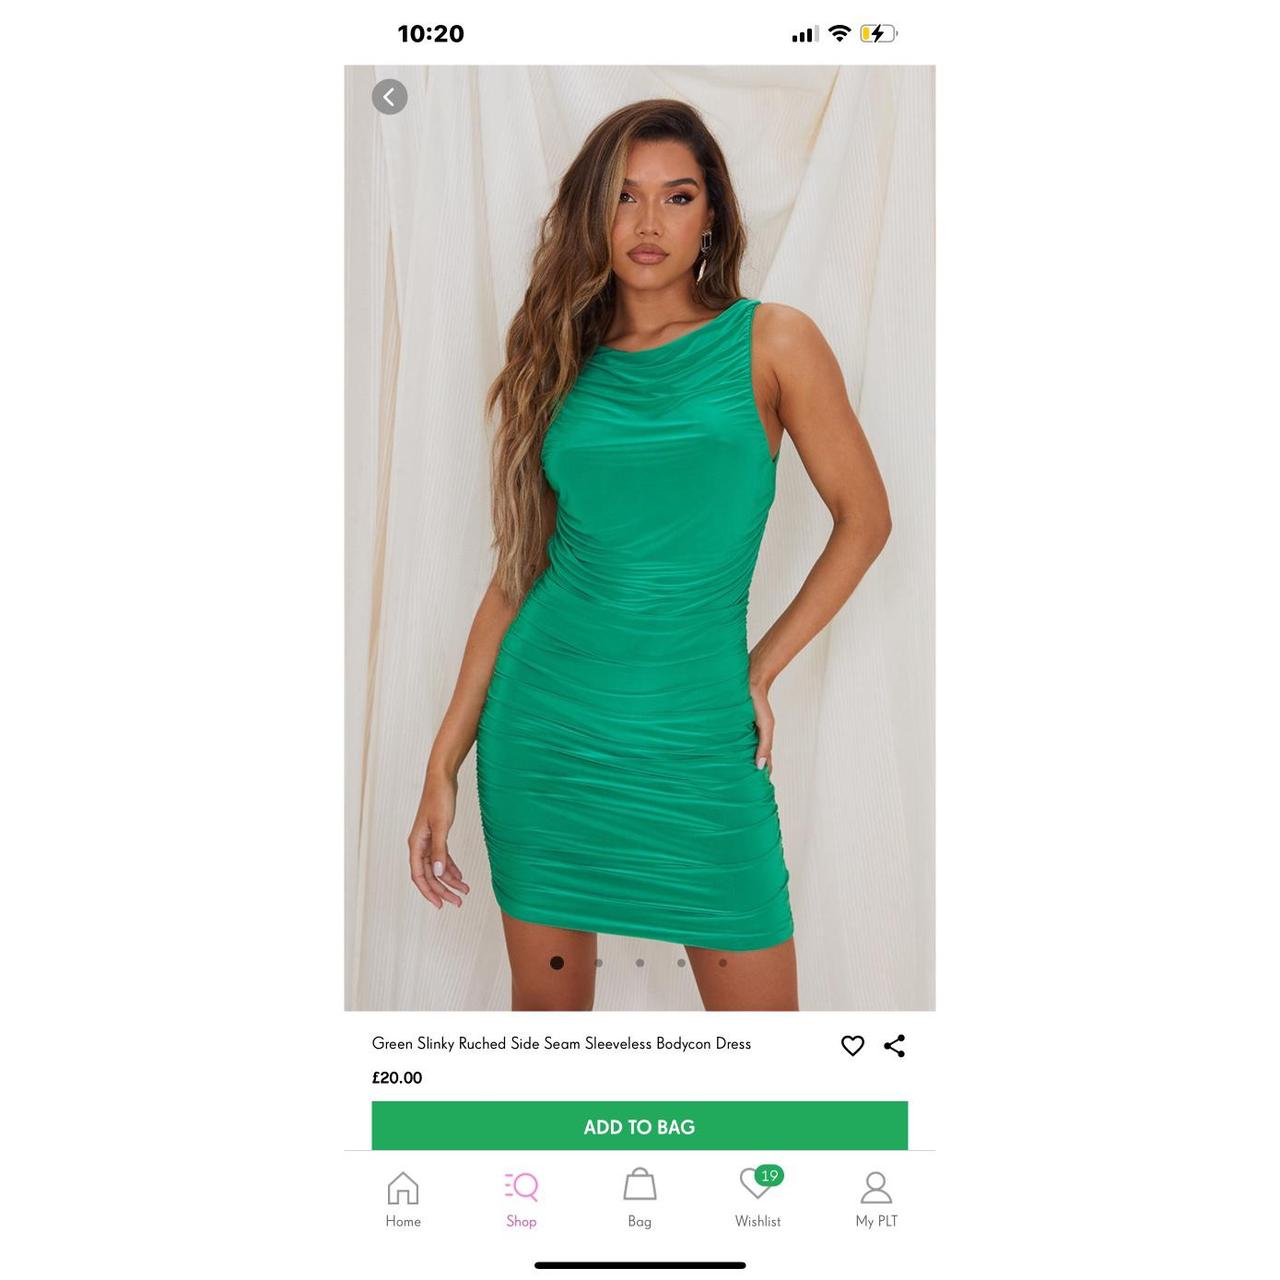 Green Slinky Ruched Side Seam Sleeveless Bodycon Dress